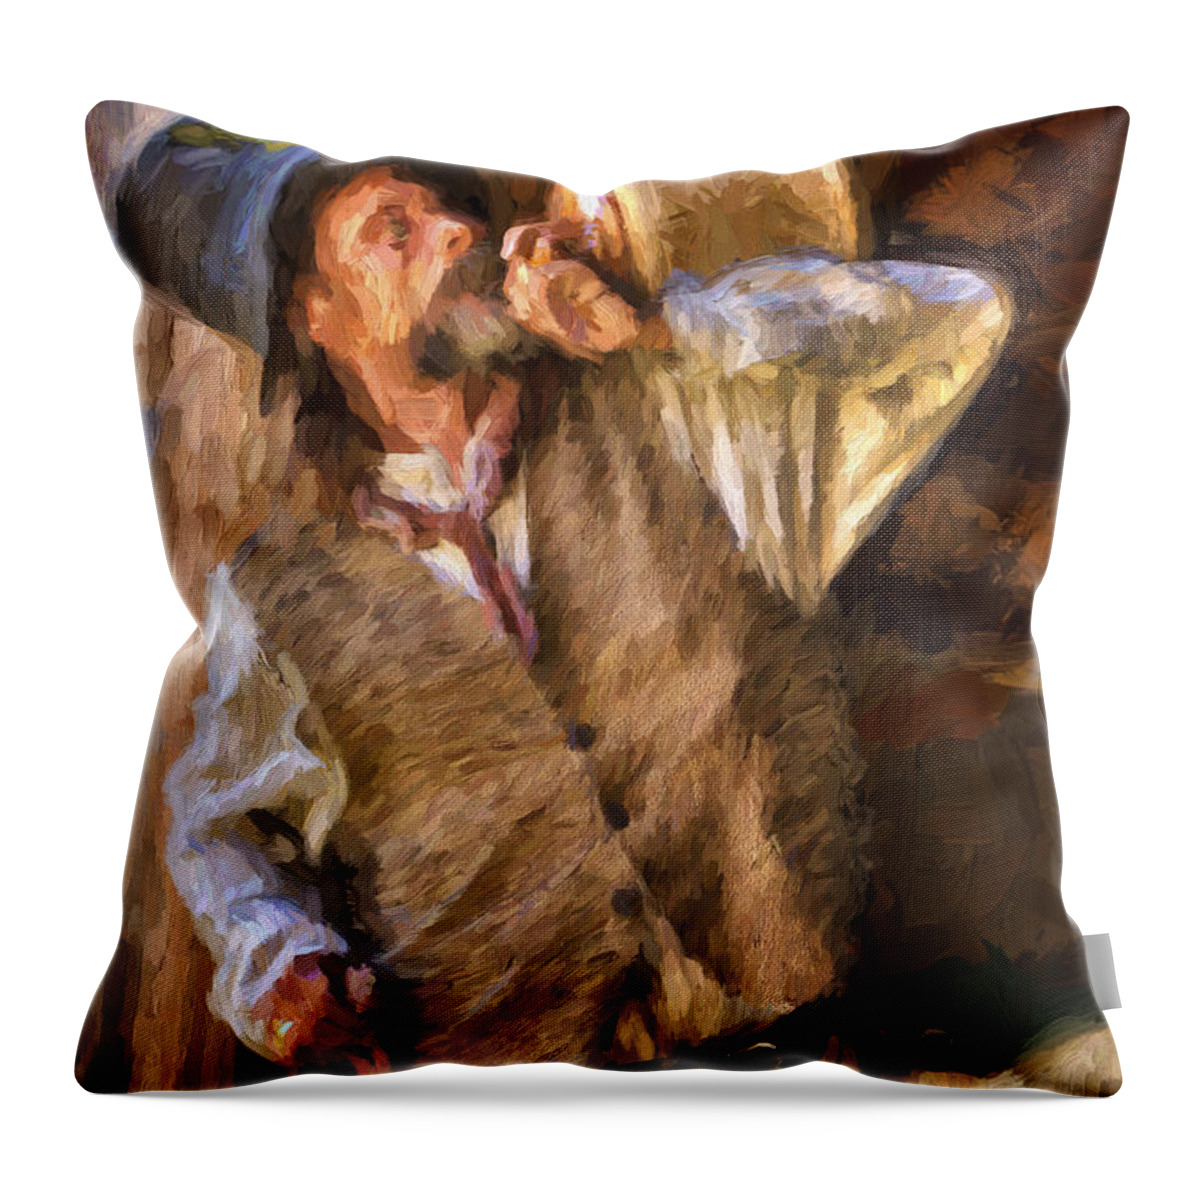 Cowboy Throw Pillow featuring the digital art Jug by Jack Milchanowski